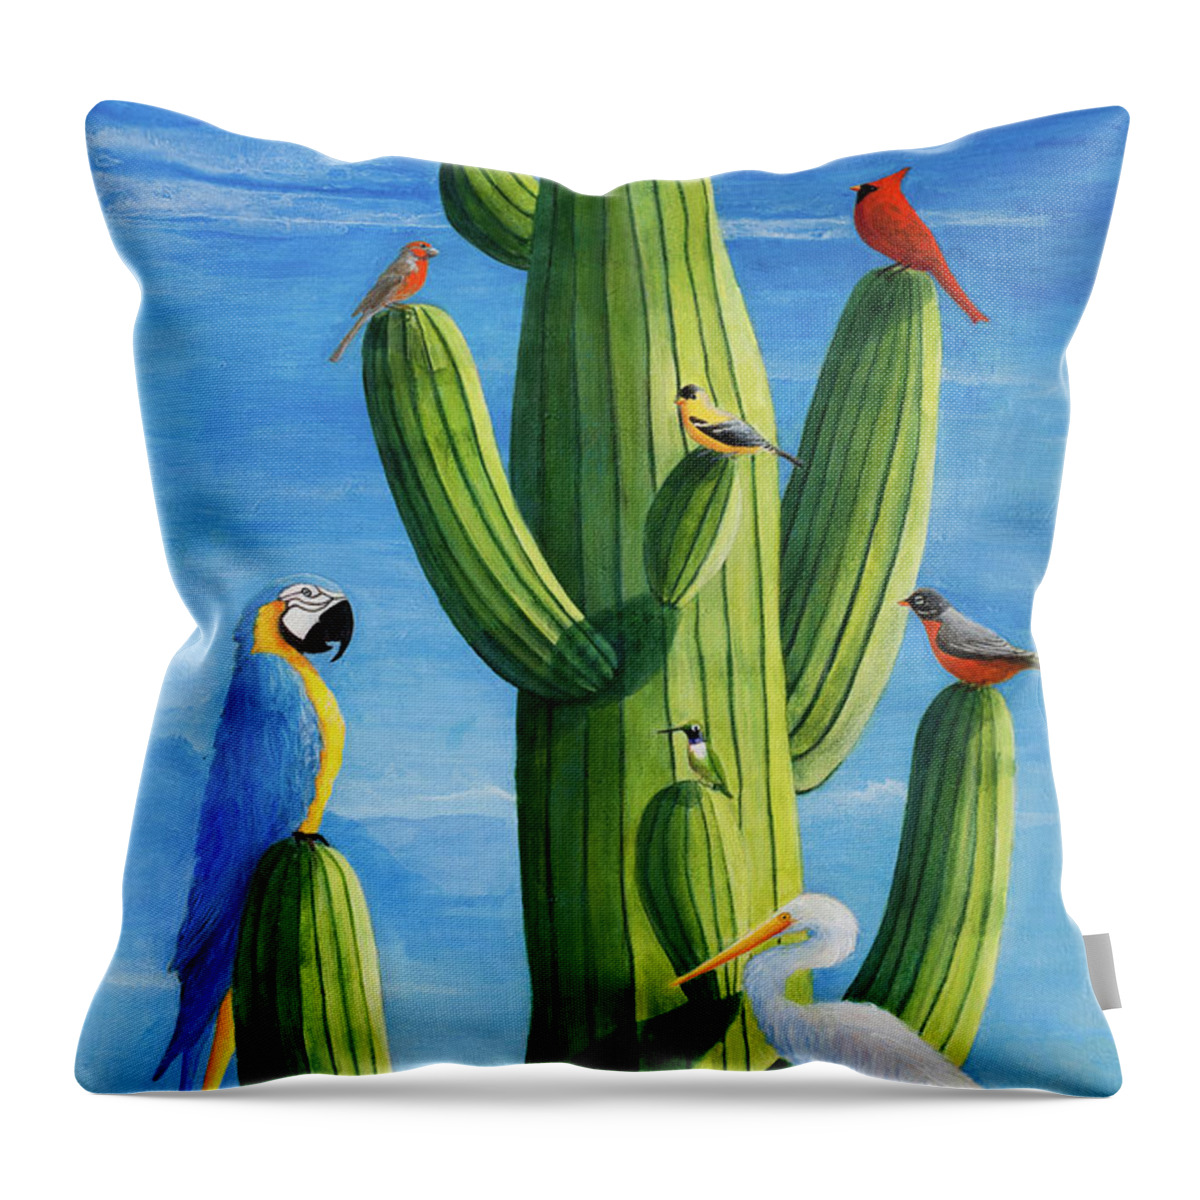 Birds Throw Pillow featuring the painting Birds of a Feather by Sandra Neumann Wilderman